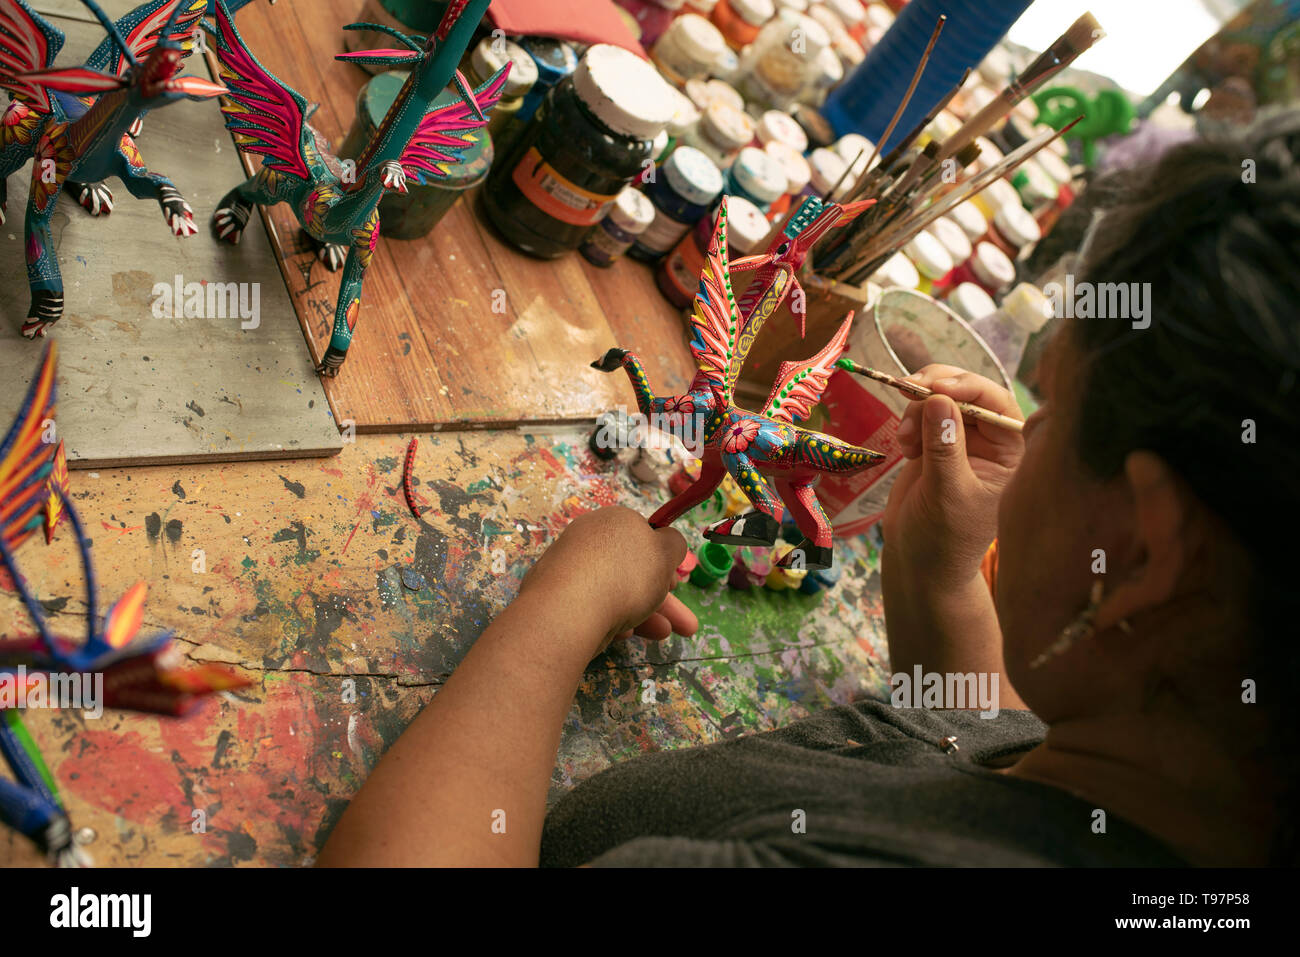 Mexican woman painting alebrijes (surreal dream-like wooden sculptures). San Martín Tilcajete, Oaxaca, Mexico. Apr 2019 Stock Photo